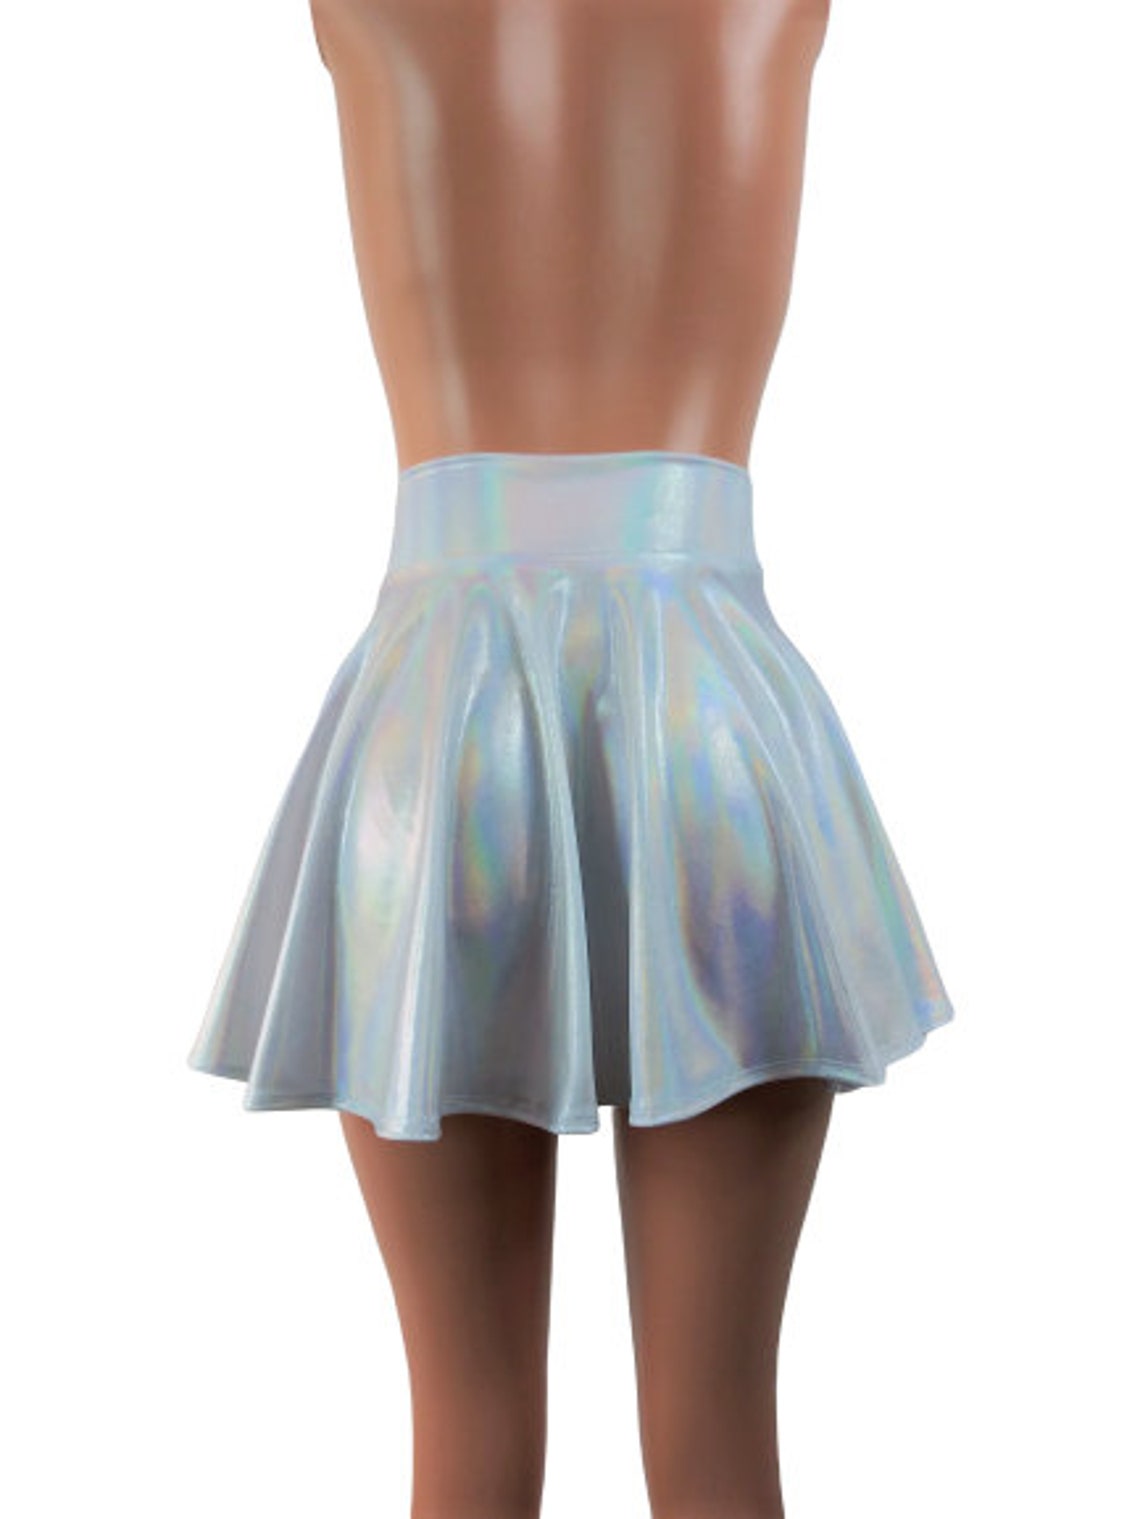 Flash bulb Skater skirt Circle skirt Soft flowing fabric | Etsy